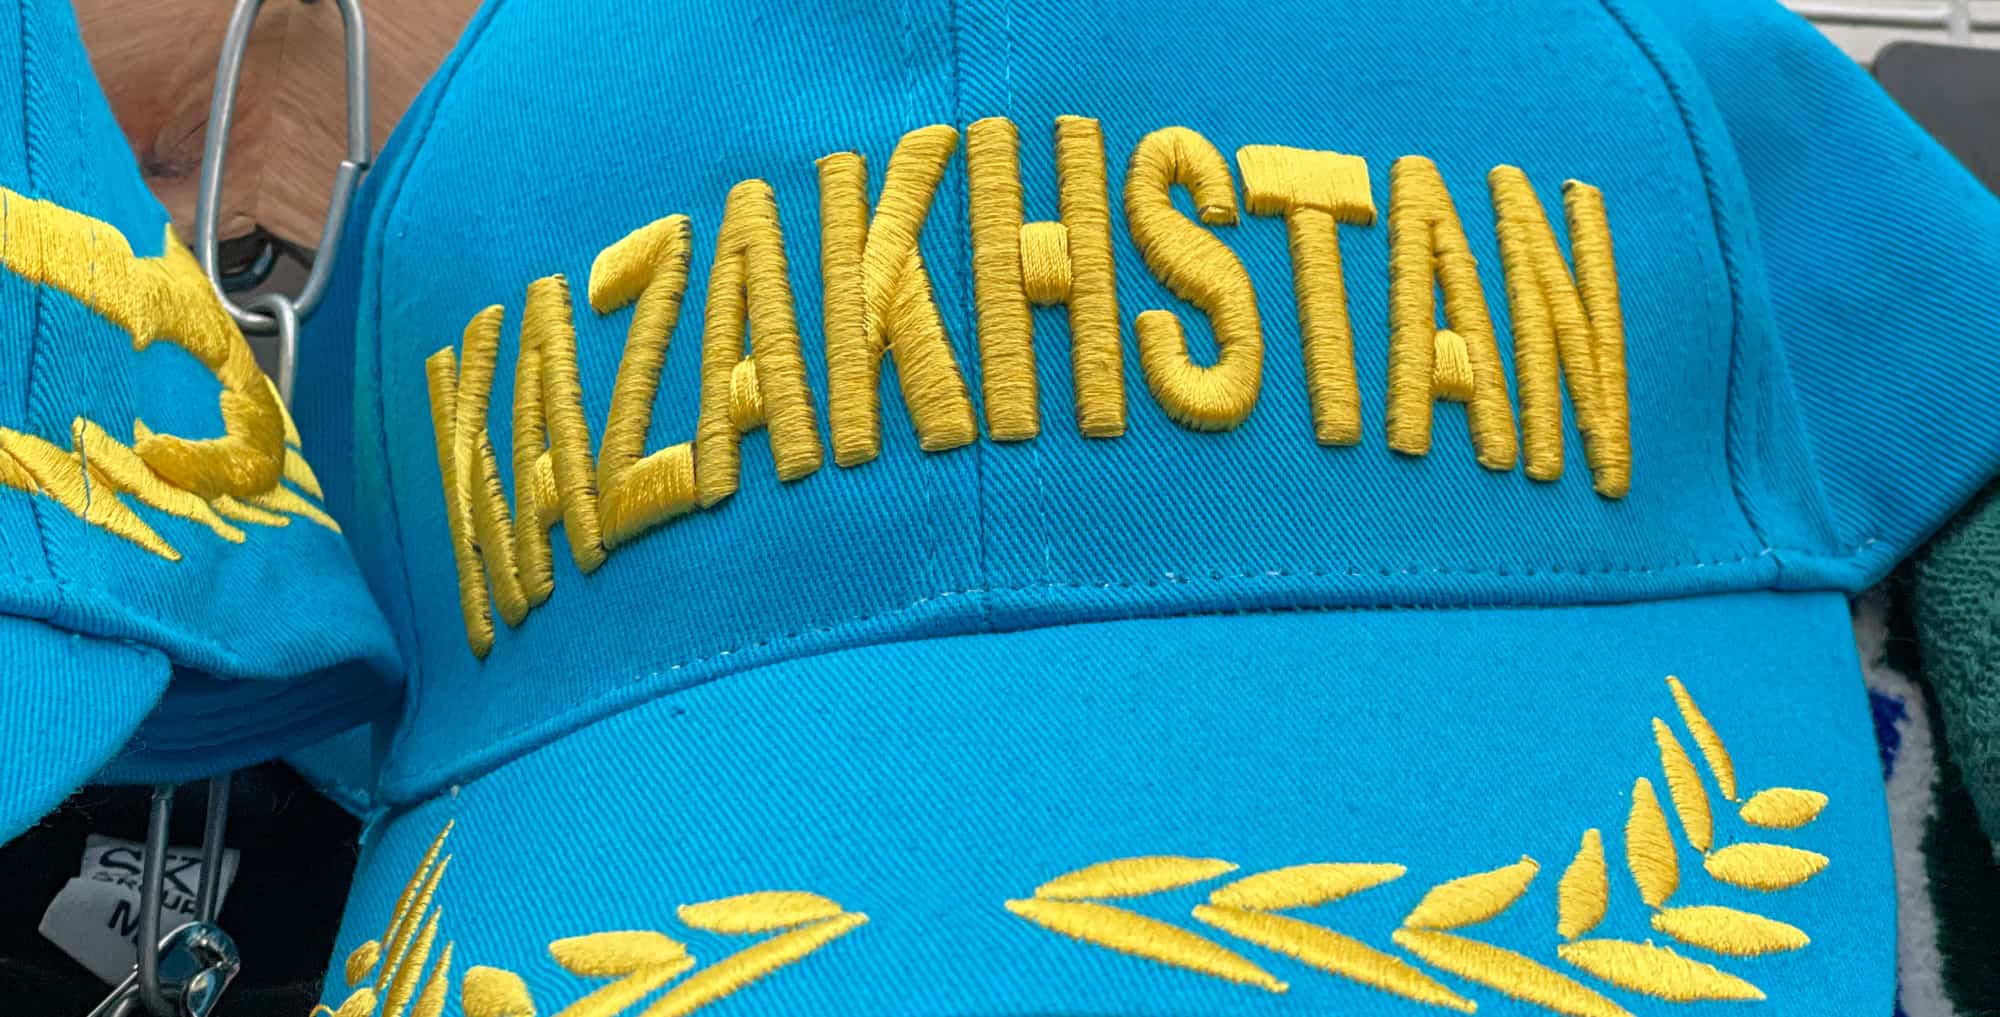 Kazakhstan - Almaty - Blue Kazakhstan baseball cap with gold letters